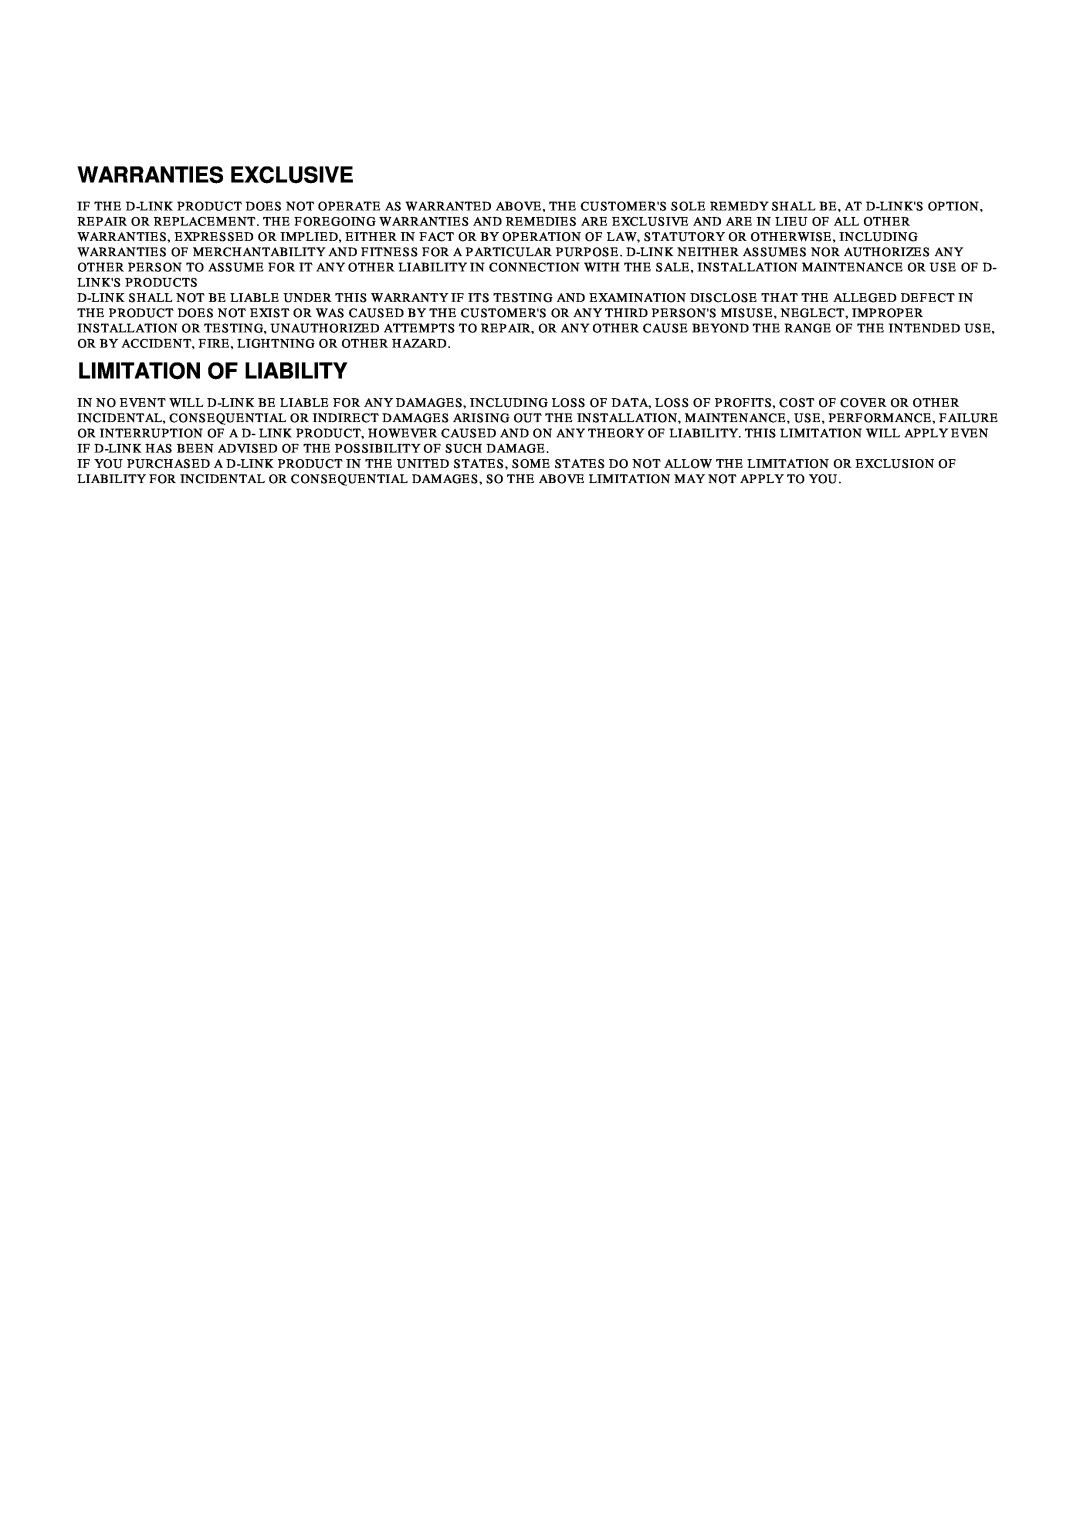 D-Link DES-3624 manual Warranties Exclusive, Limitation Of Liability 